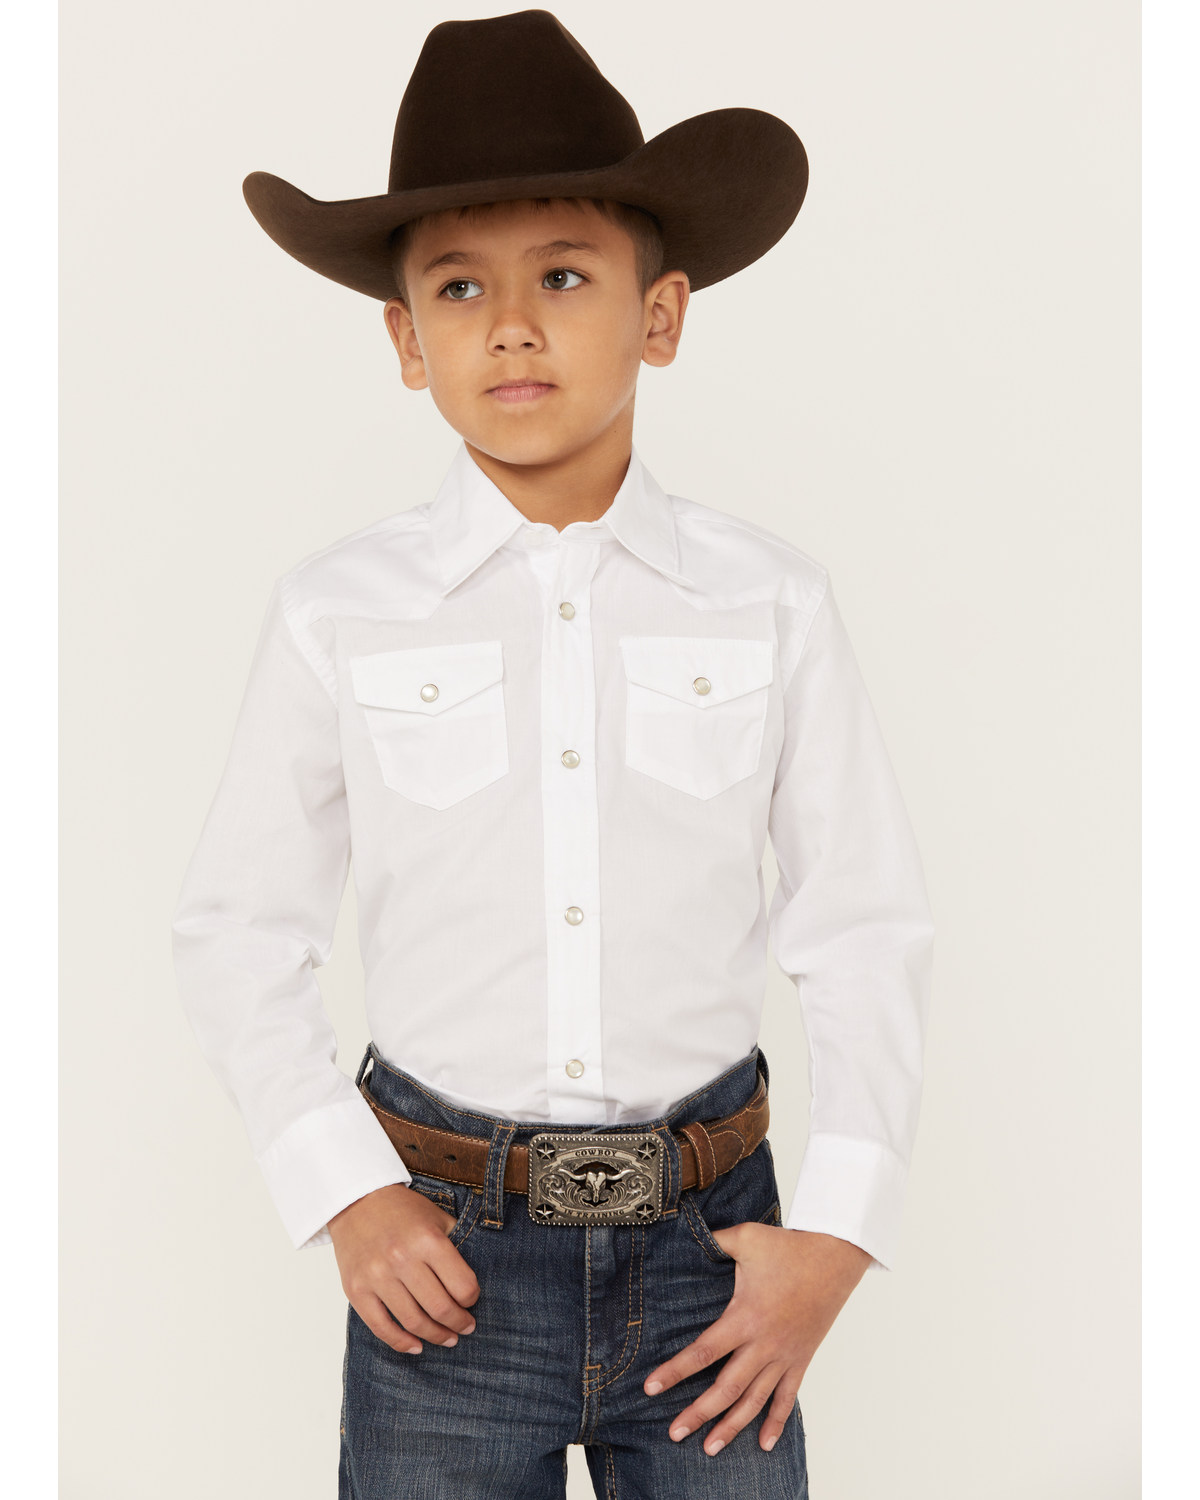 Wrangler Boy's Dress Western Solid Snap Shirt